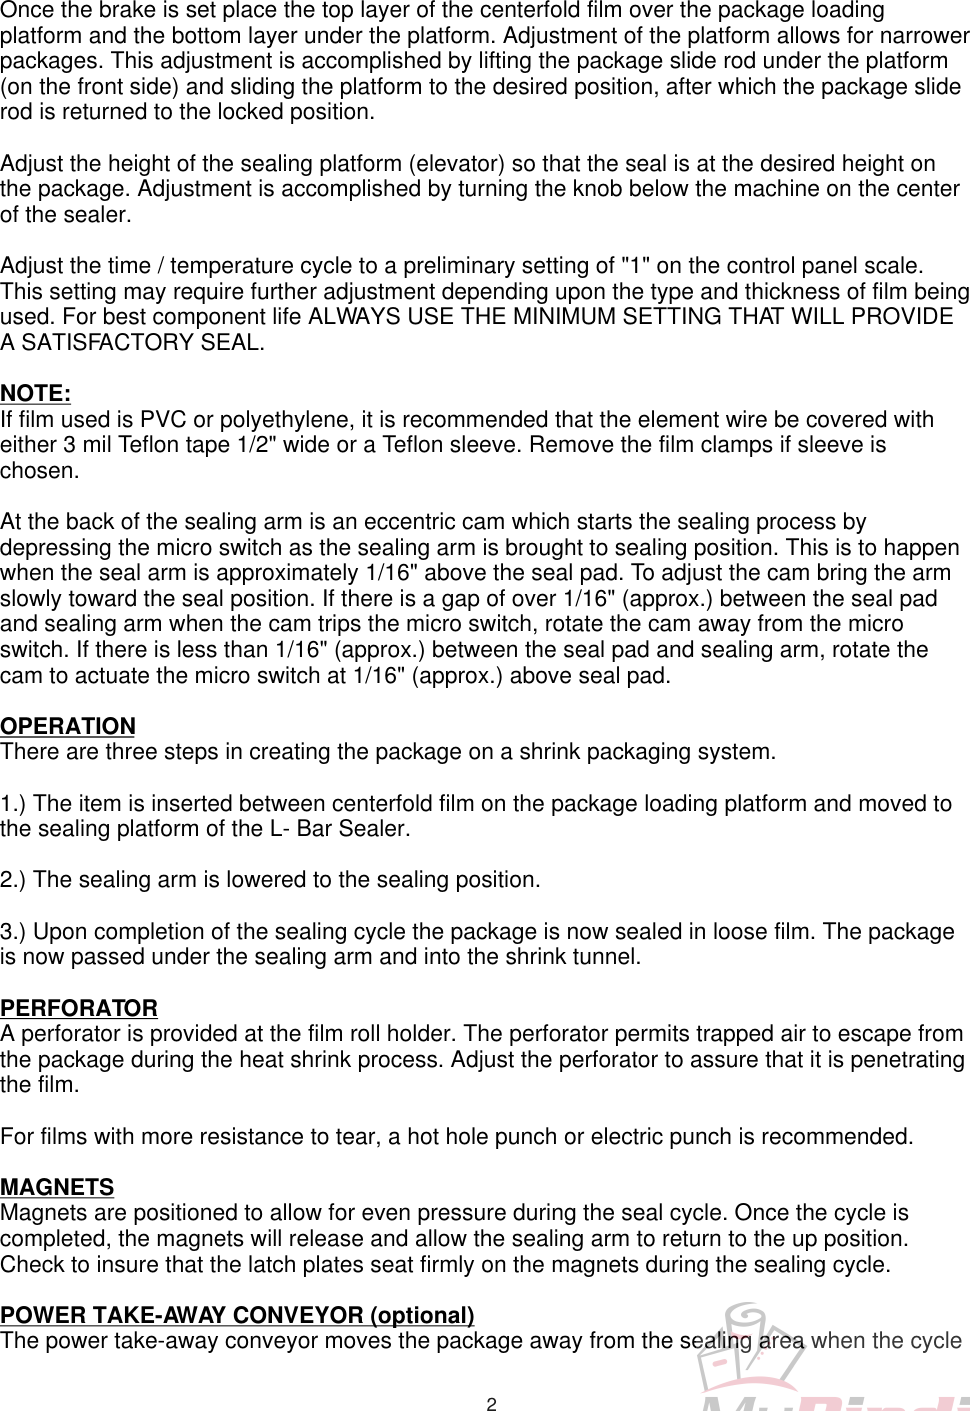 Page 4 of 10 - MyBinding Traco-Tm1620-Manual User Manual